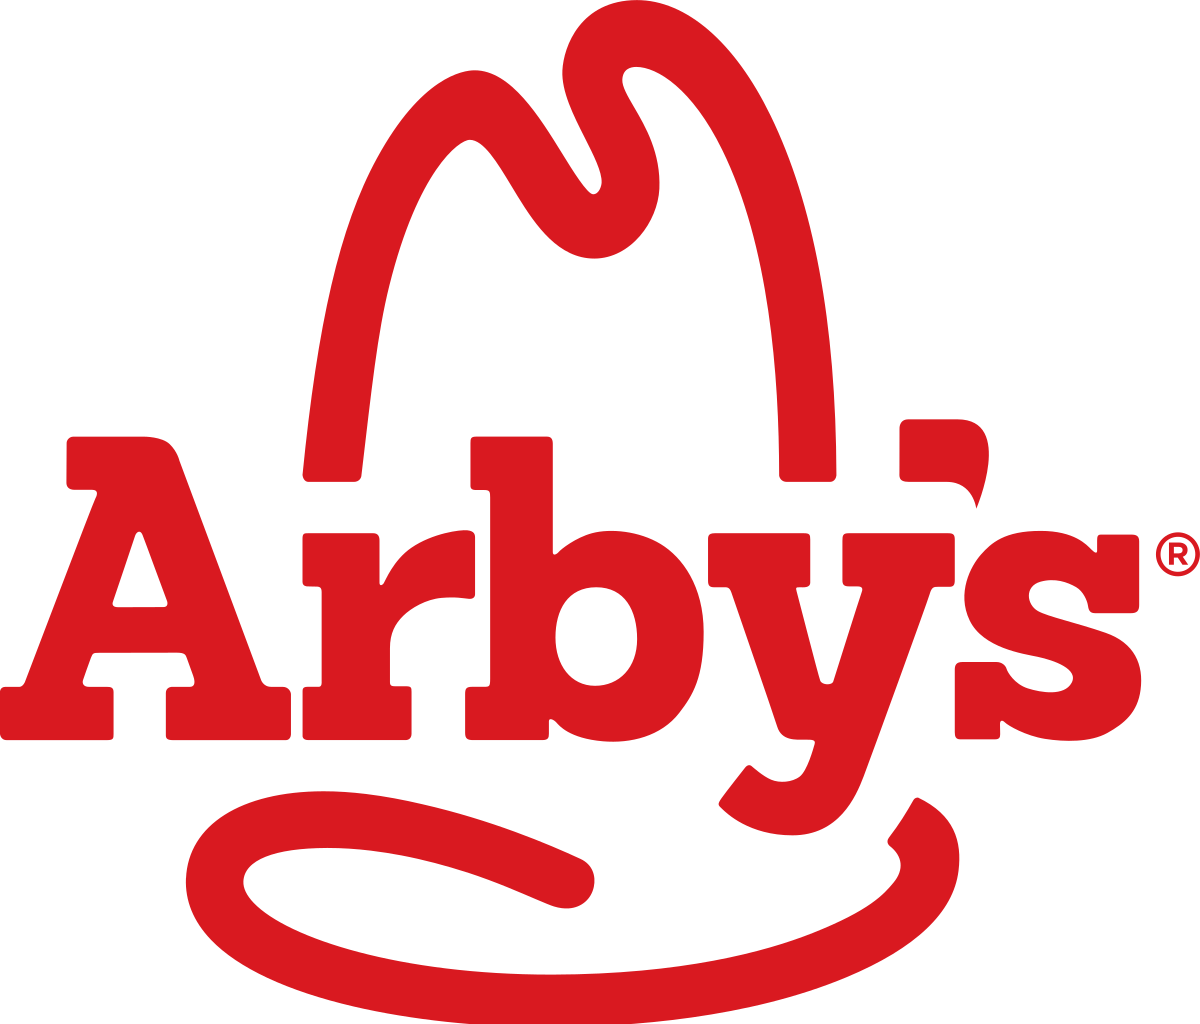 Red Restaurants Logo - Arby's